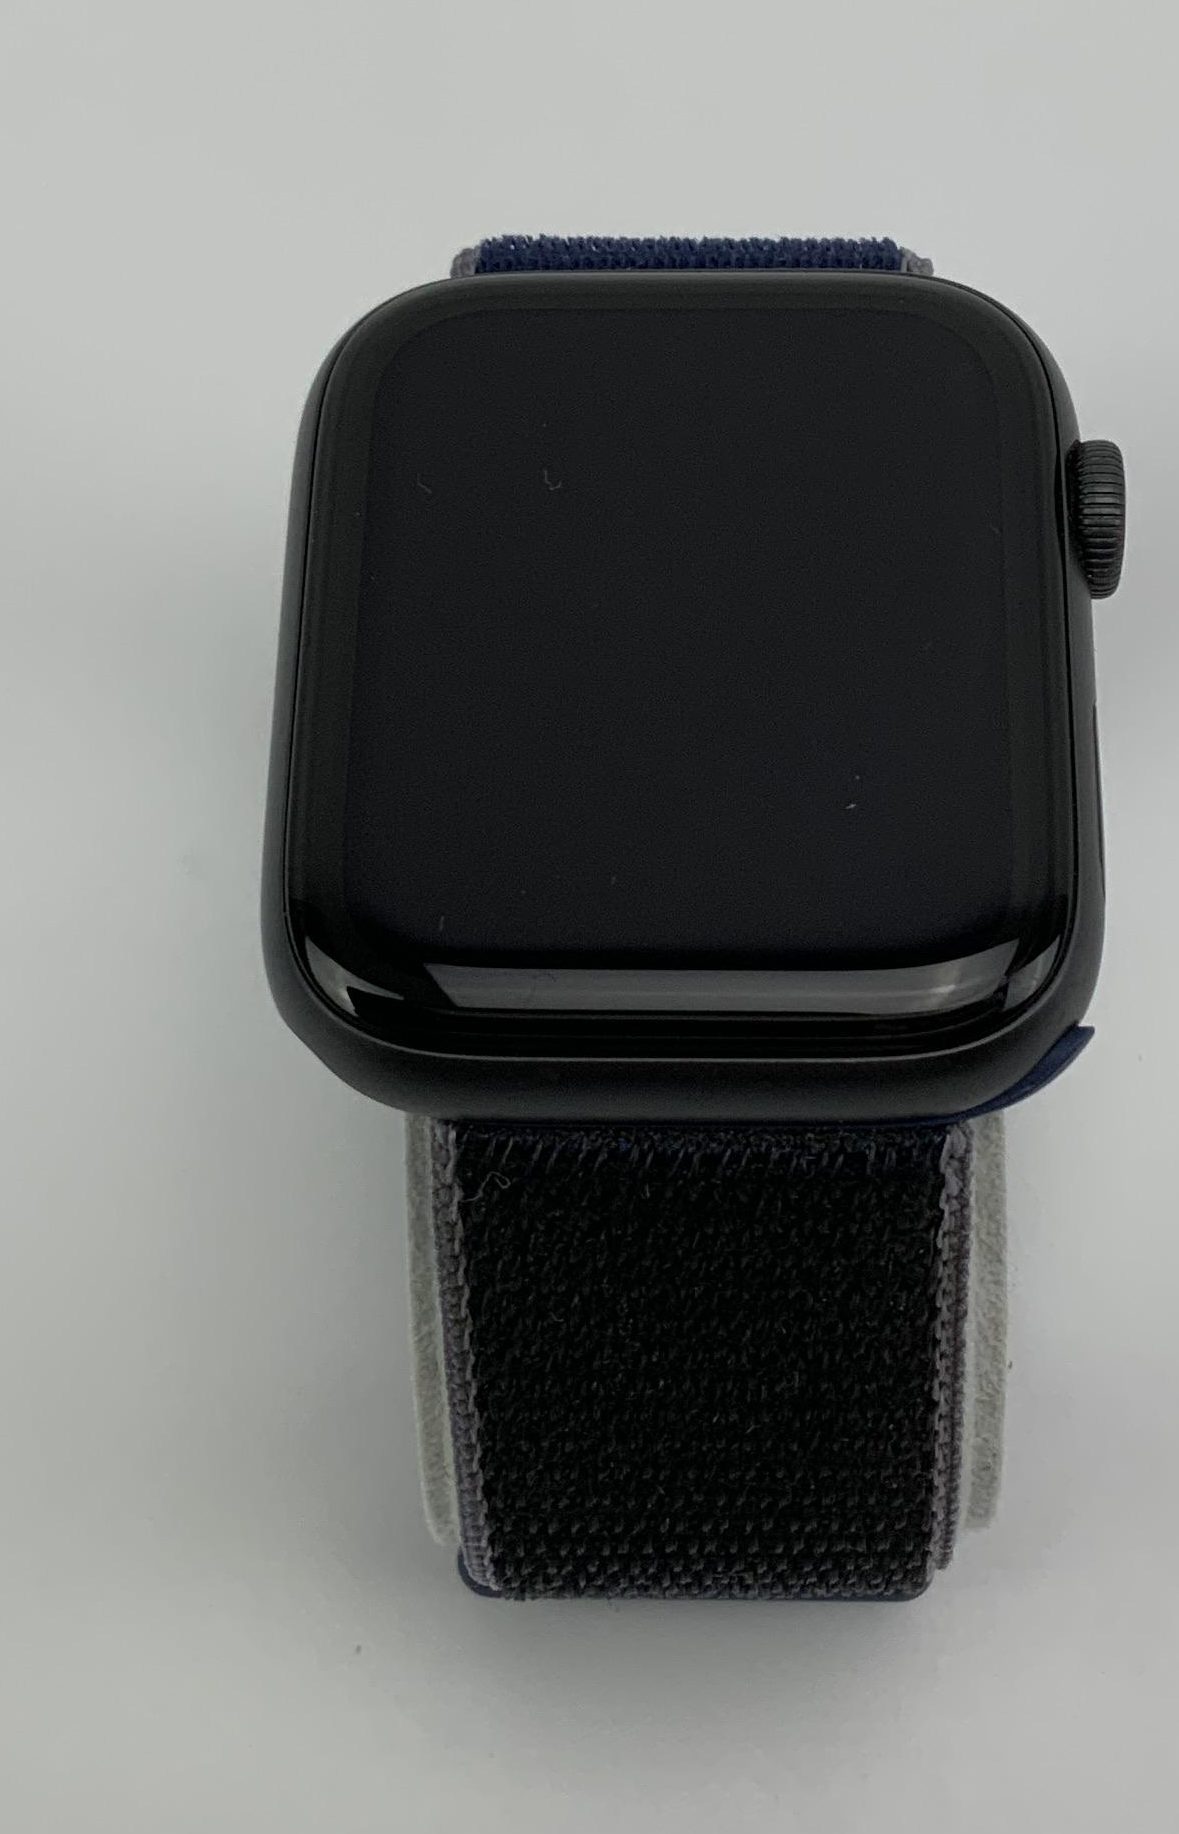 Watch Series 5 Aluminum Cellular (44mm), Space Gray, Bild 1